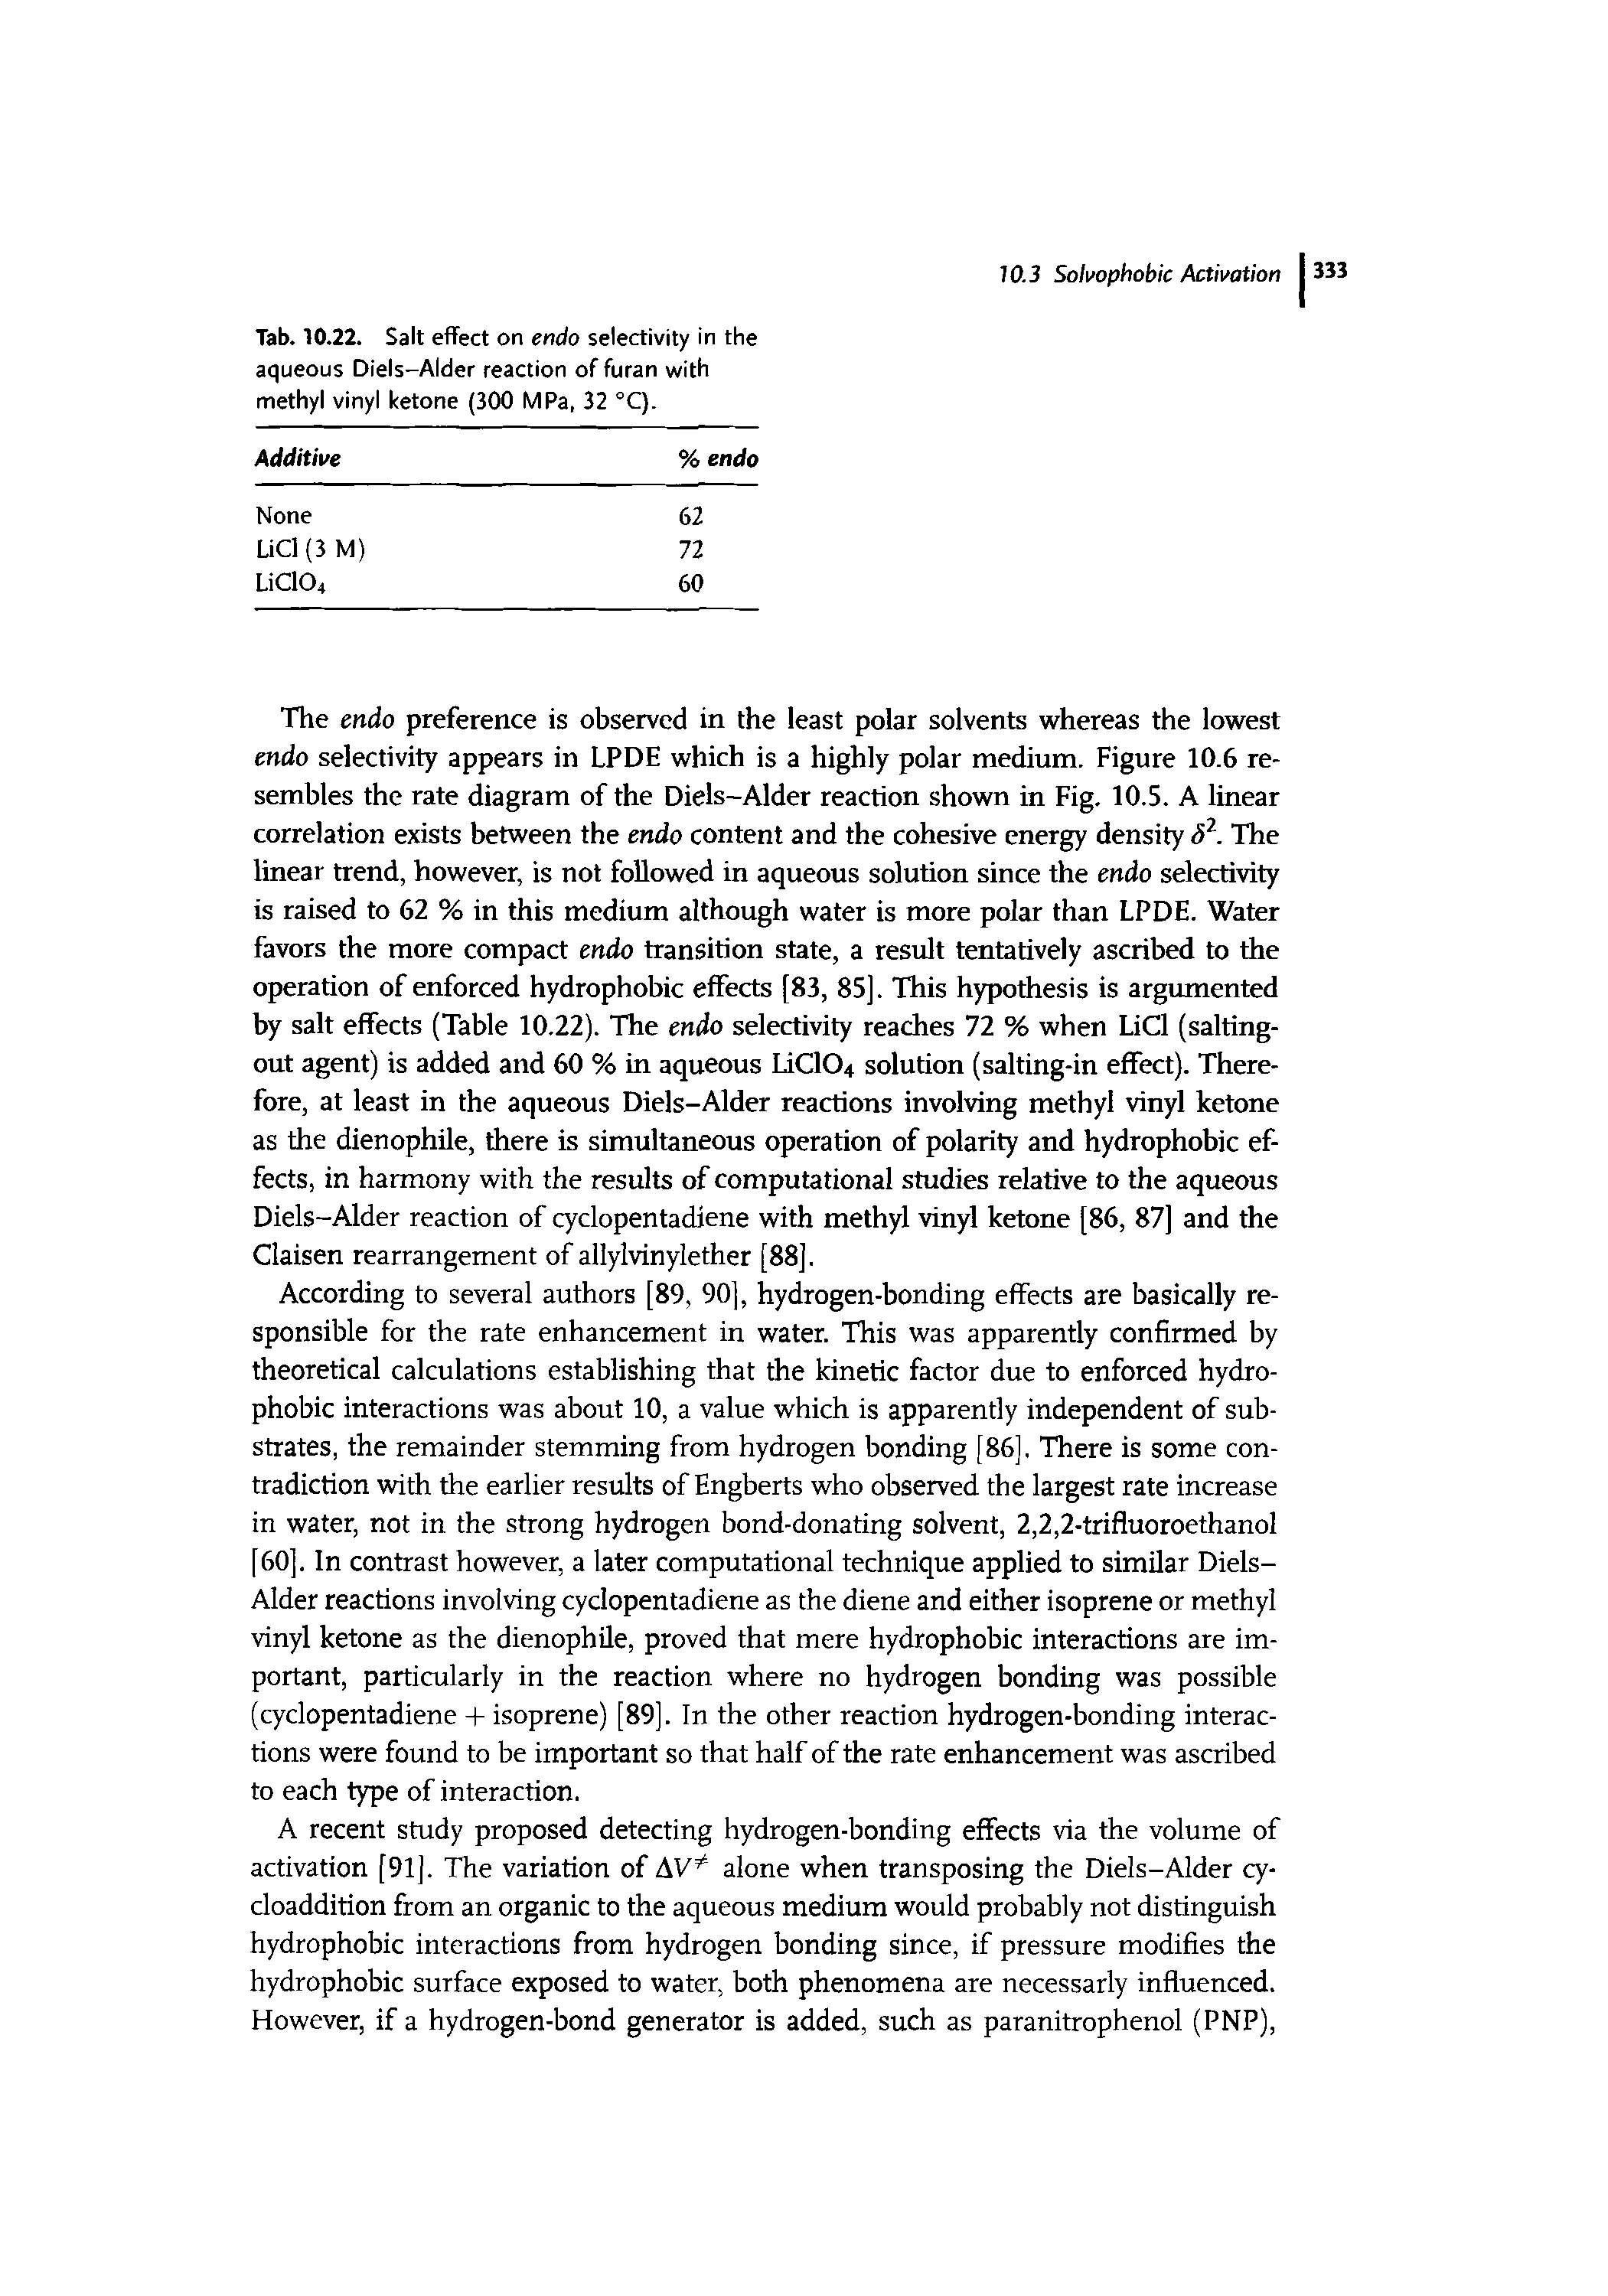 Tab. 10.22. Salt effect on endo selectivity in the aqueous Diels-Alder reaction of furan with methyl vinyl ketone (300 MPa, 32 °C).